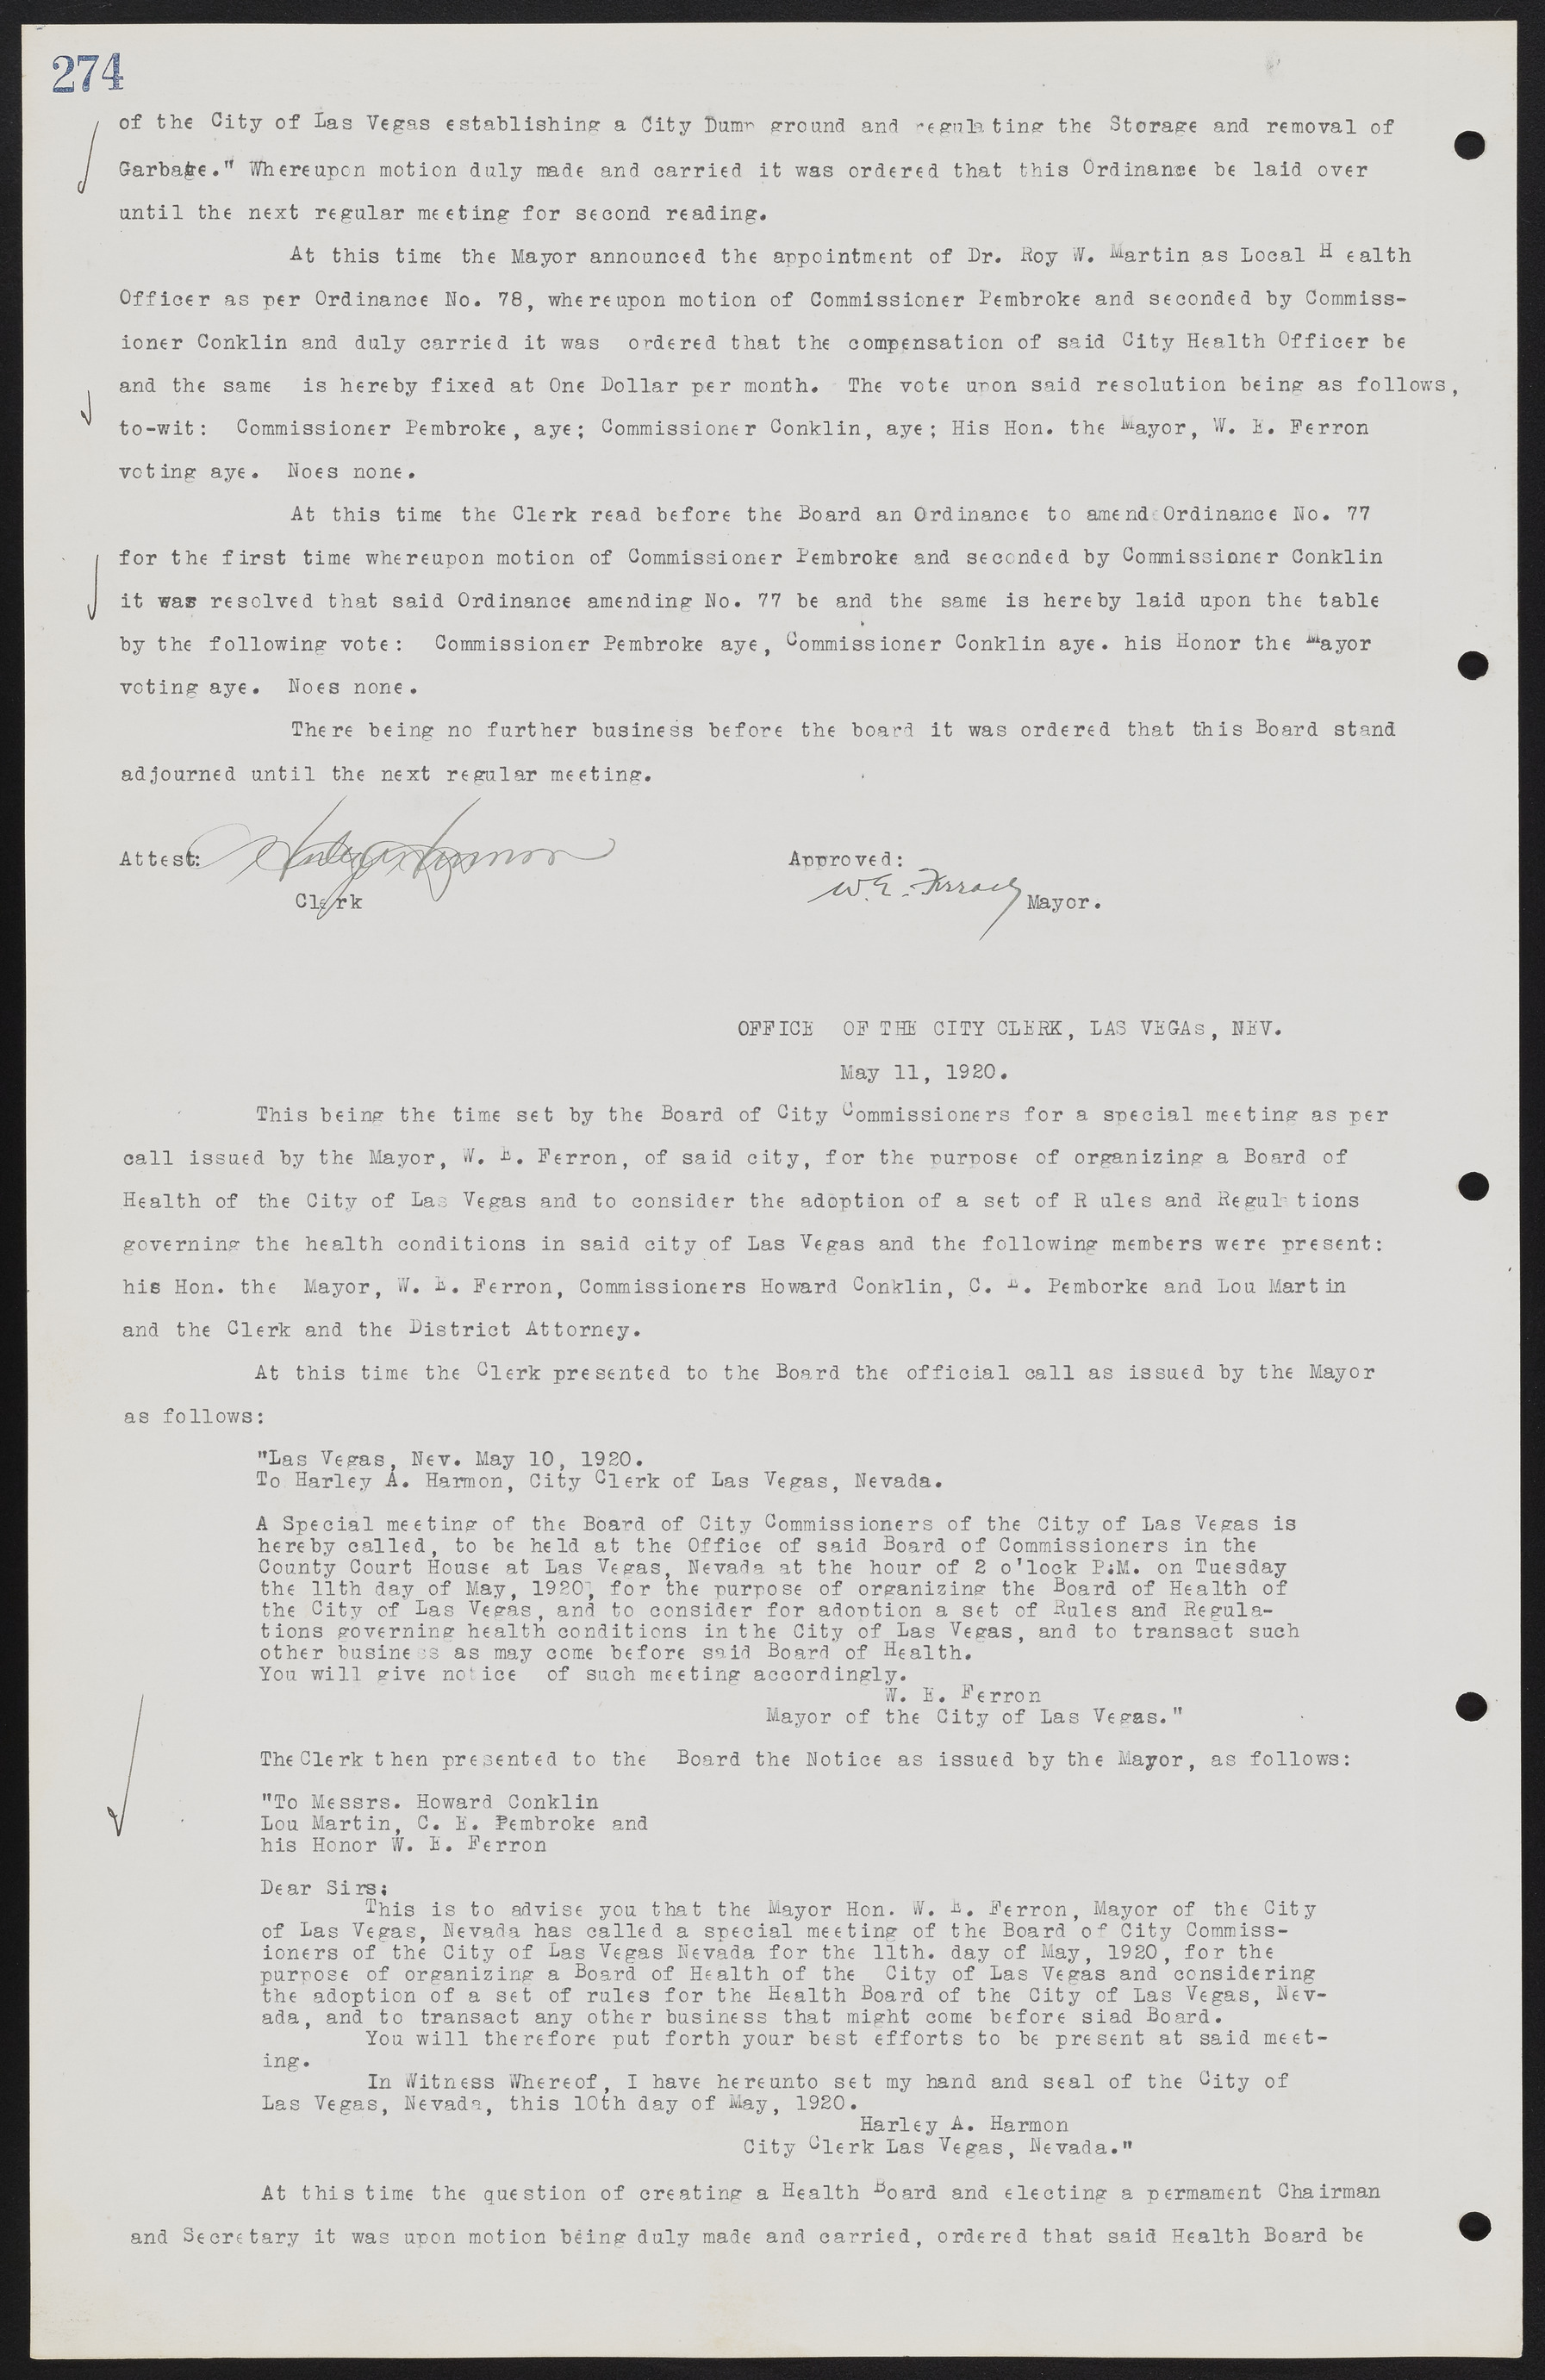 Las Vegas City Commission Minutes, June 22, 1911 to February 7, 1922, lvc000001-290